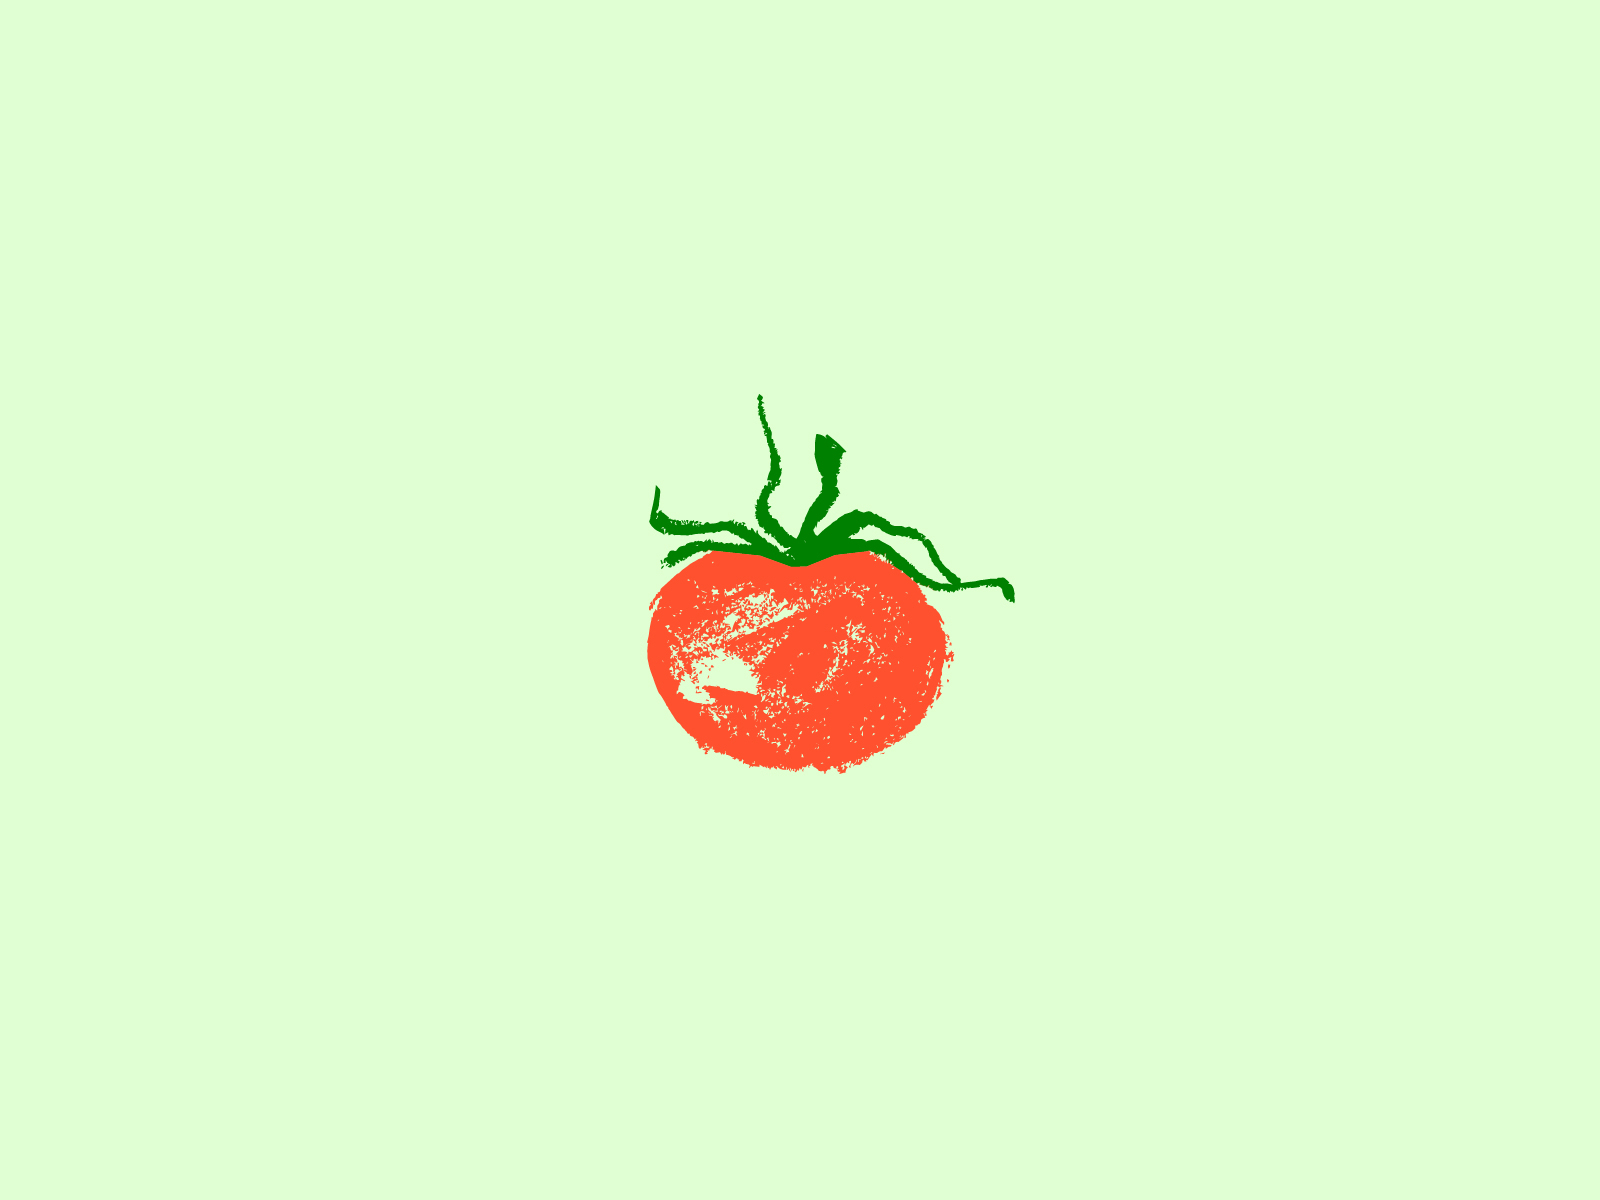 Ripe Red Tomato by Oleg Agafonov on Dribbble